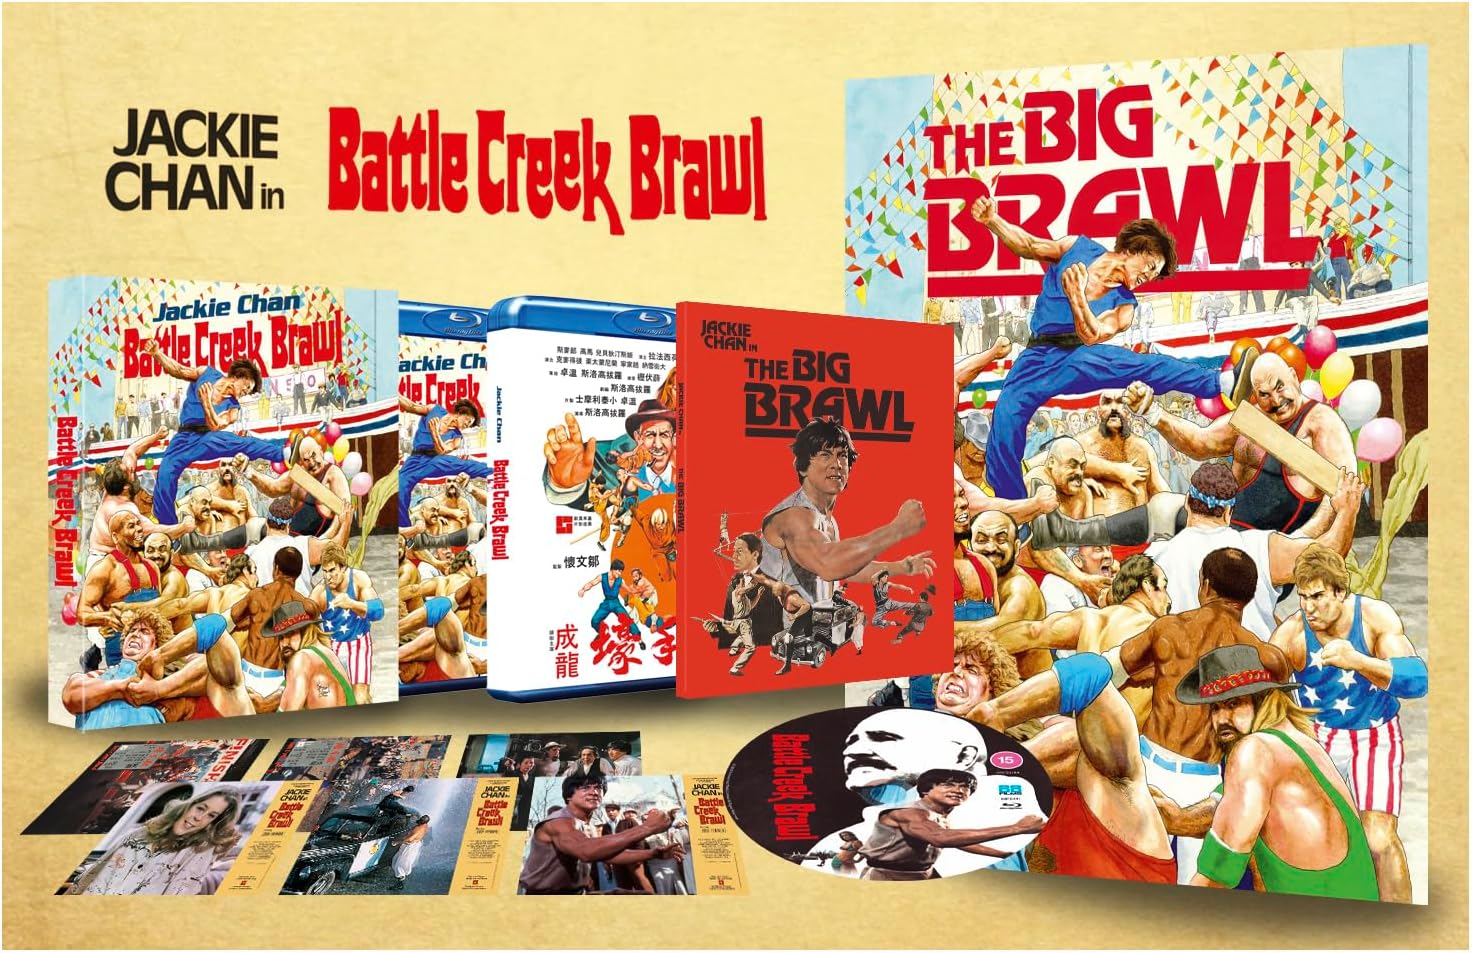 88 Films releases the Blu-ray version of Battle Creek Brawl.